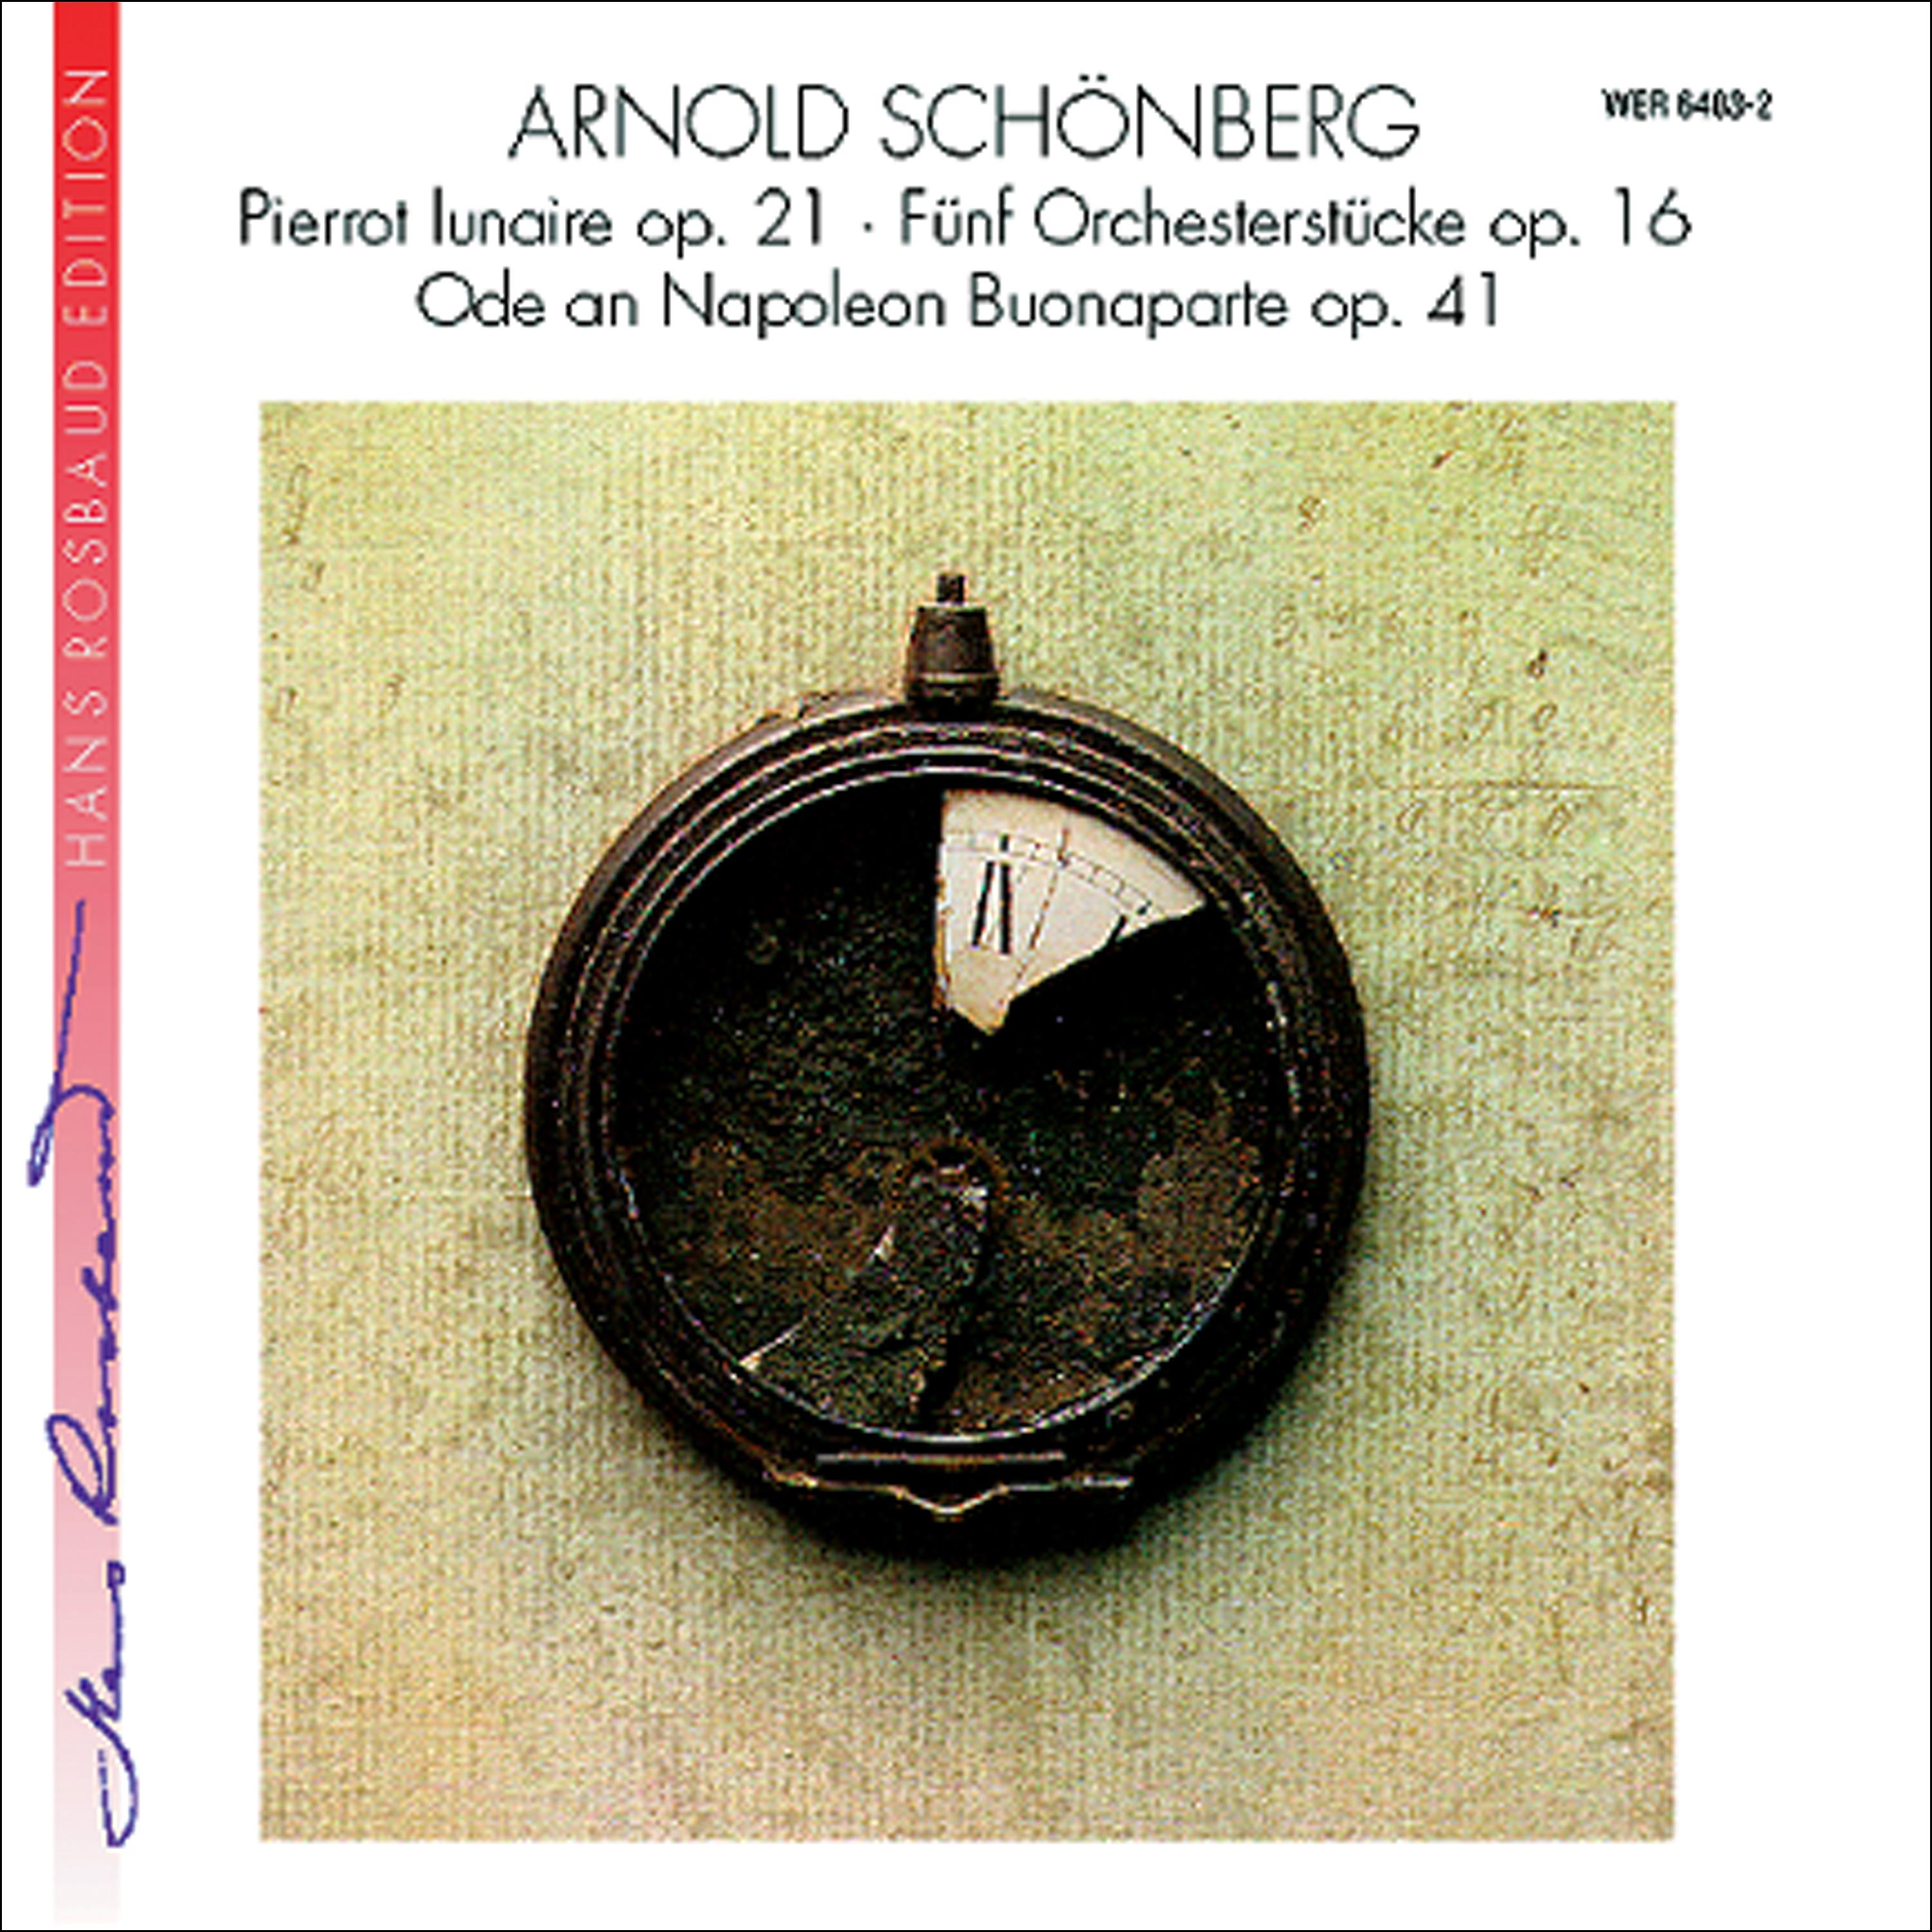 Постер альбома Arnold Schönberg: Fünf Orchesterstücke Op. 16 / Ode an Napoleon Buonaparte Op. 41 / Pierrot lunaire Op. 21